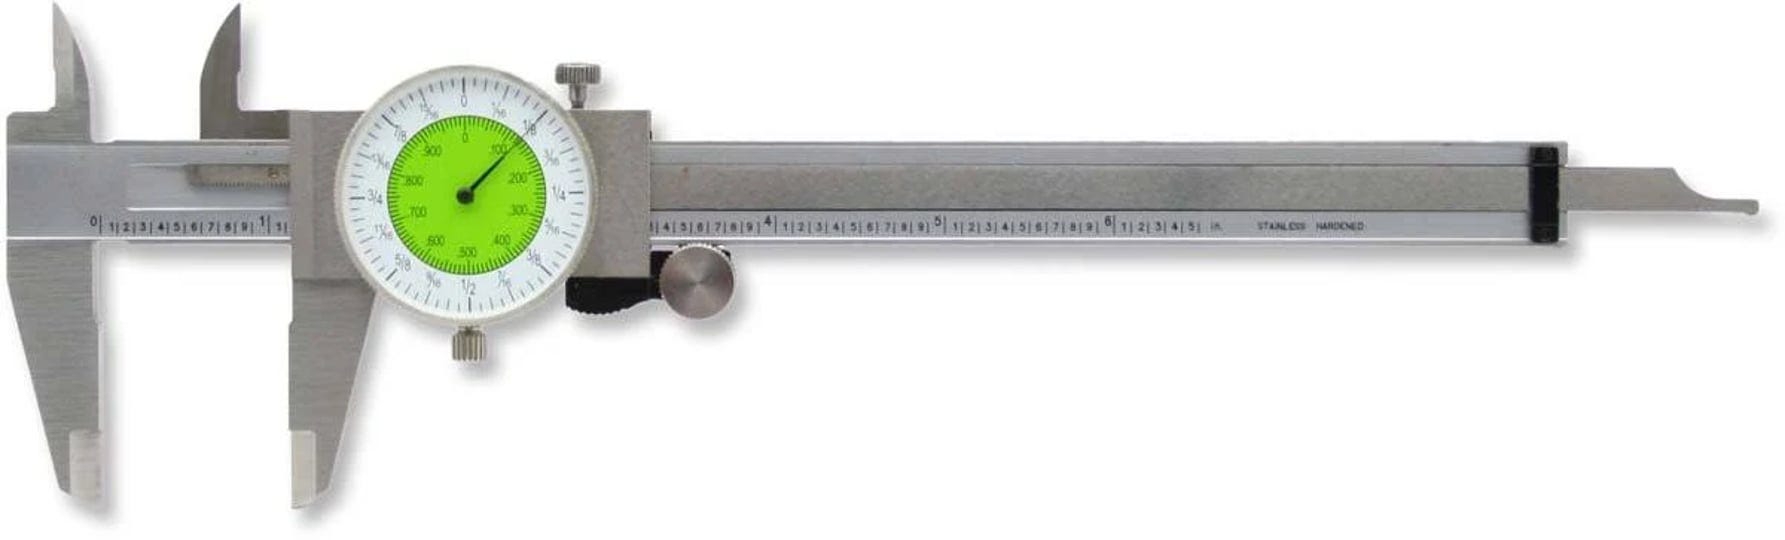 6-inch-stainless-steel-fractional-dial-caliper-oshlun-mtdcf-7